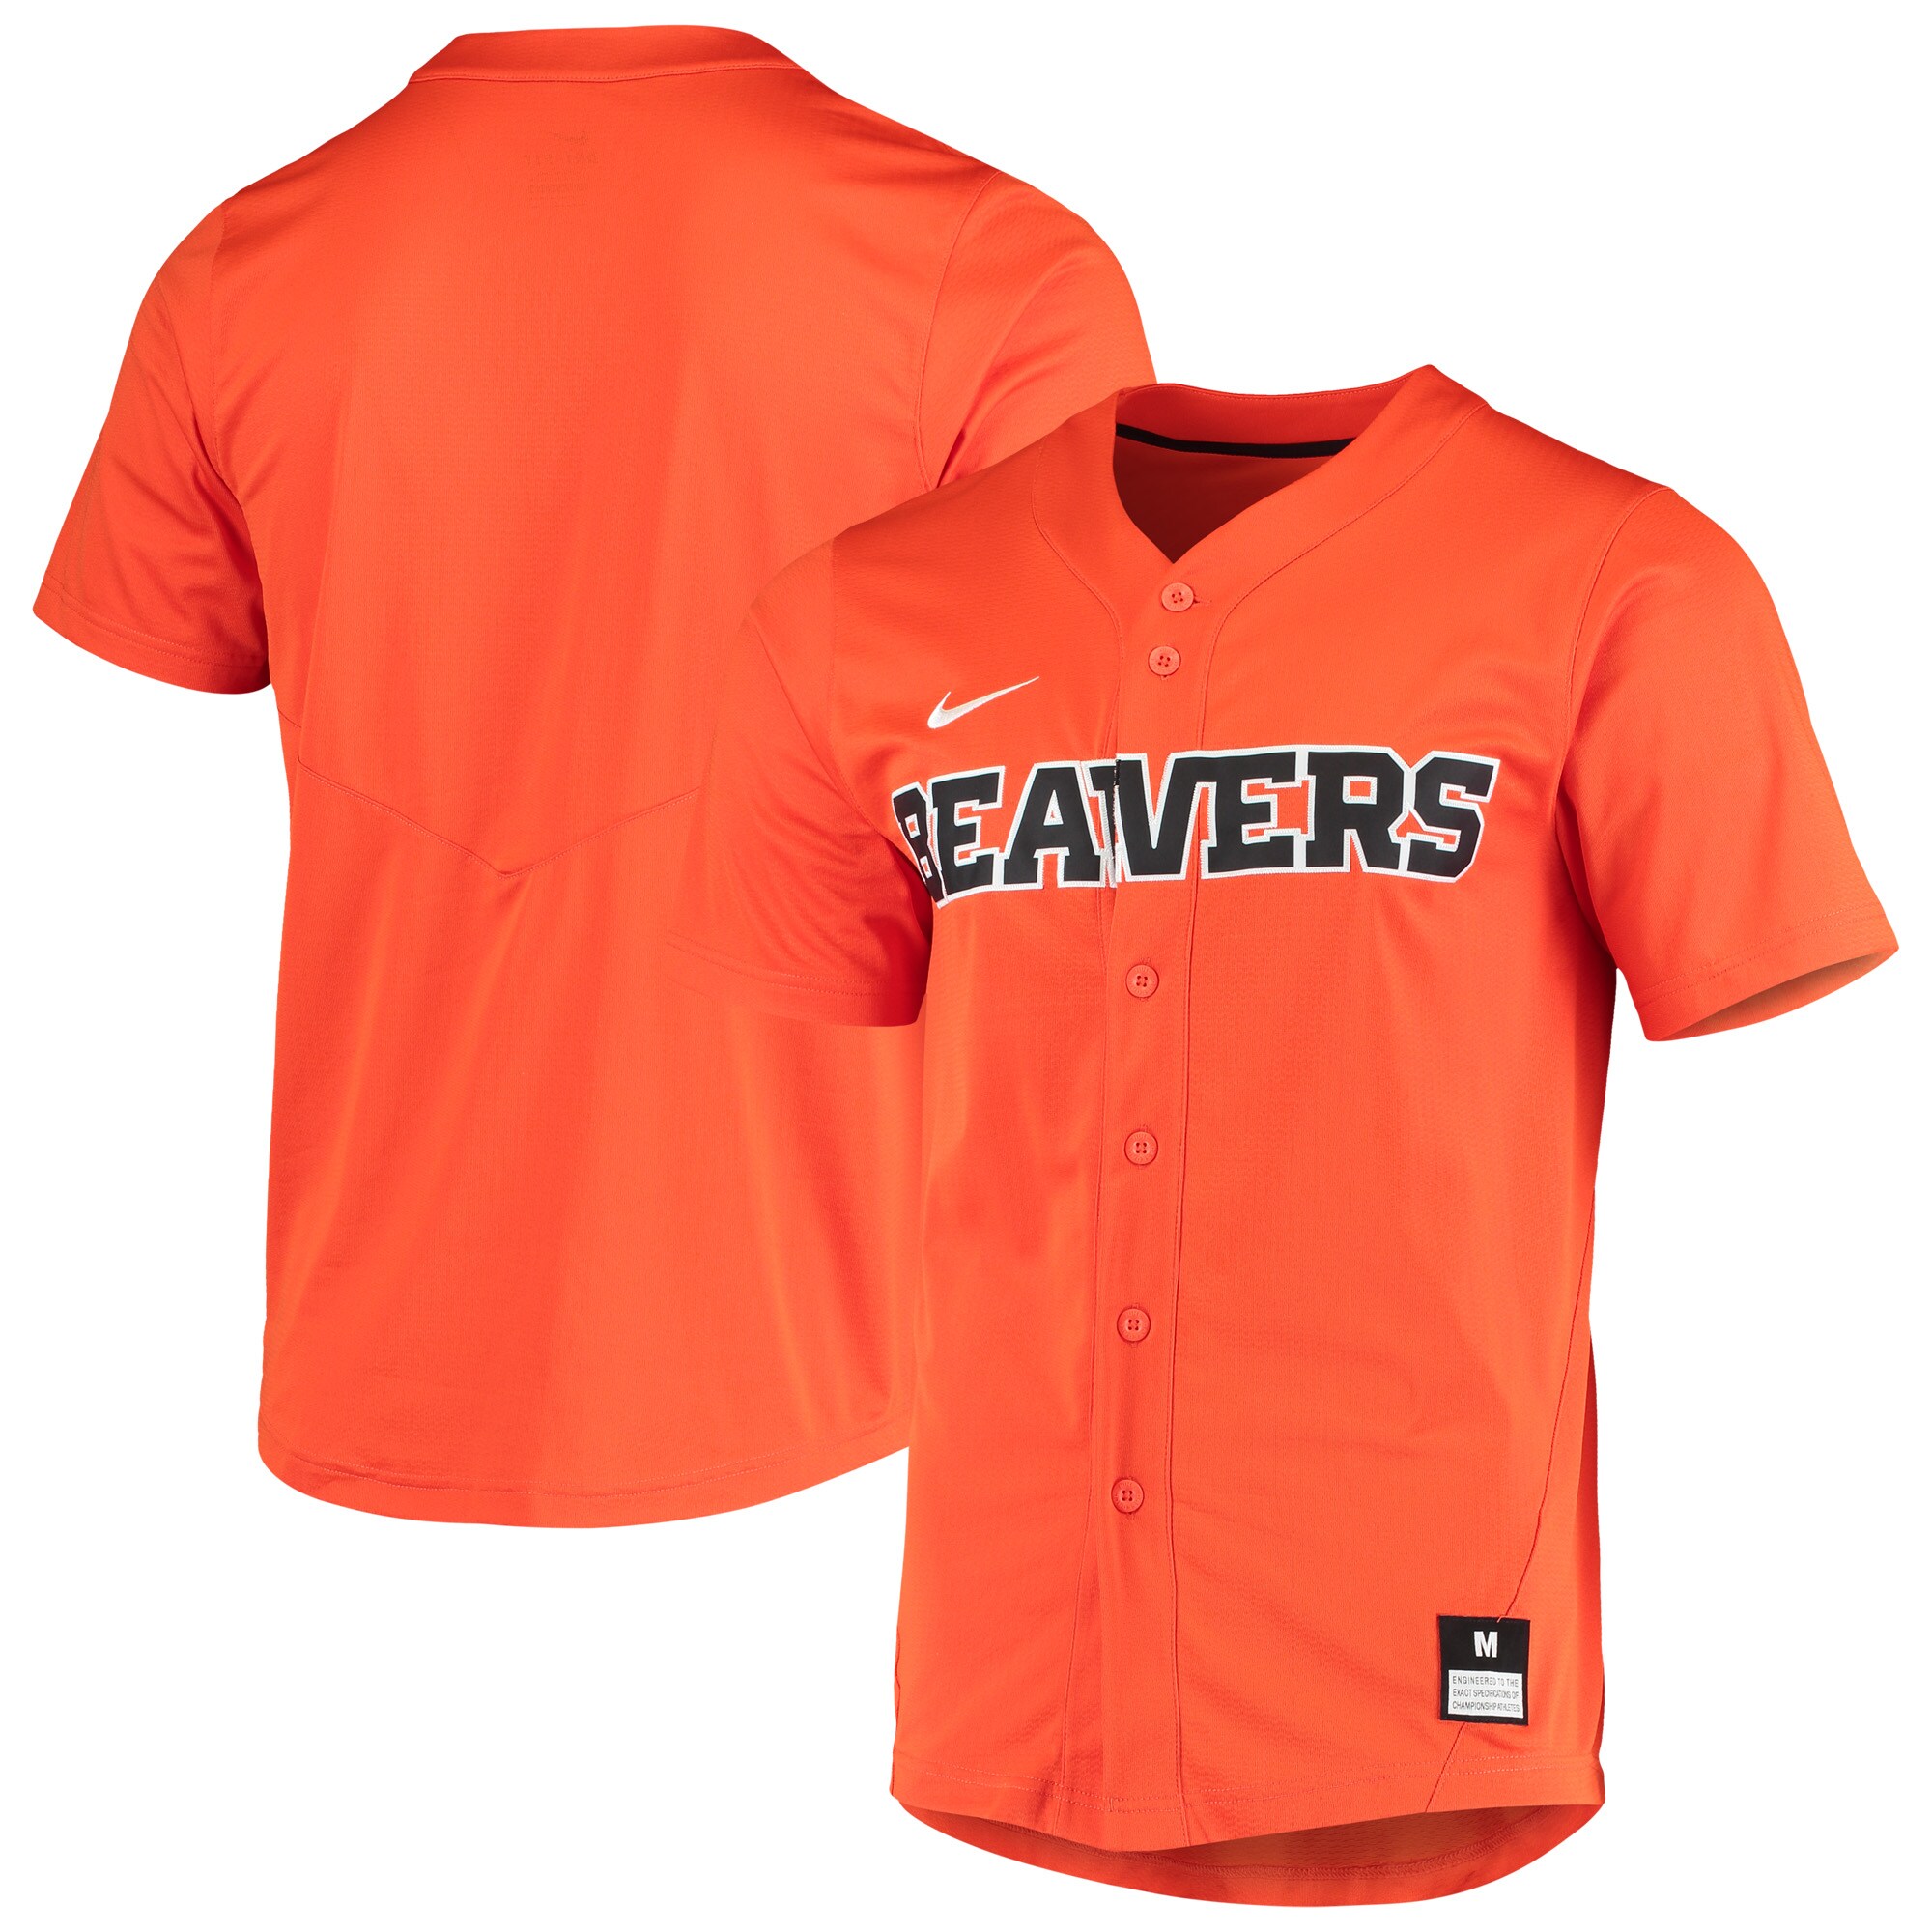 Oregon State Beavers Vapor Untouchable Elite Replica Full-Button Baseball Jersey - Orange For Youth Women Men